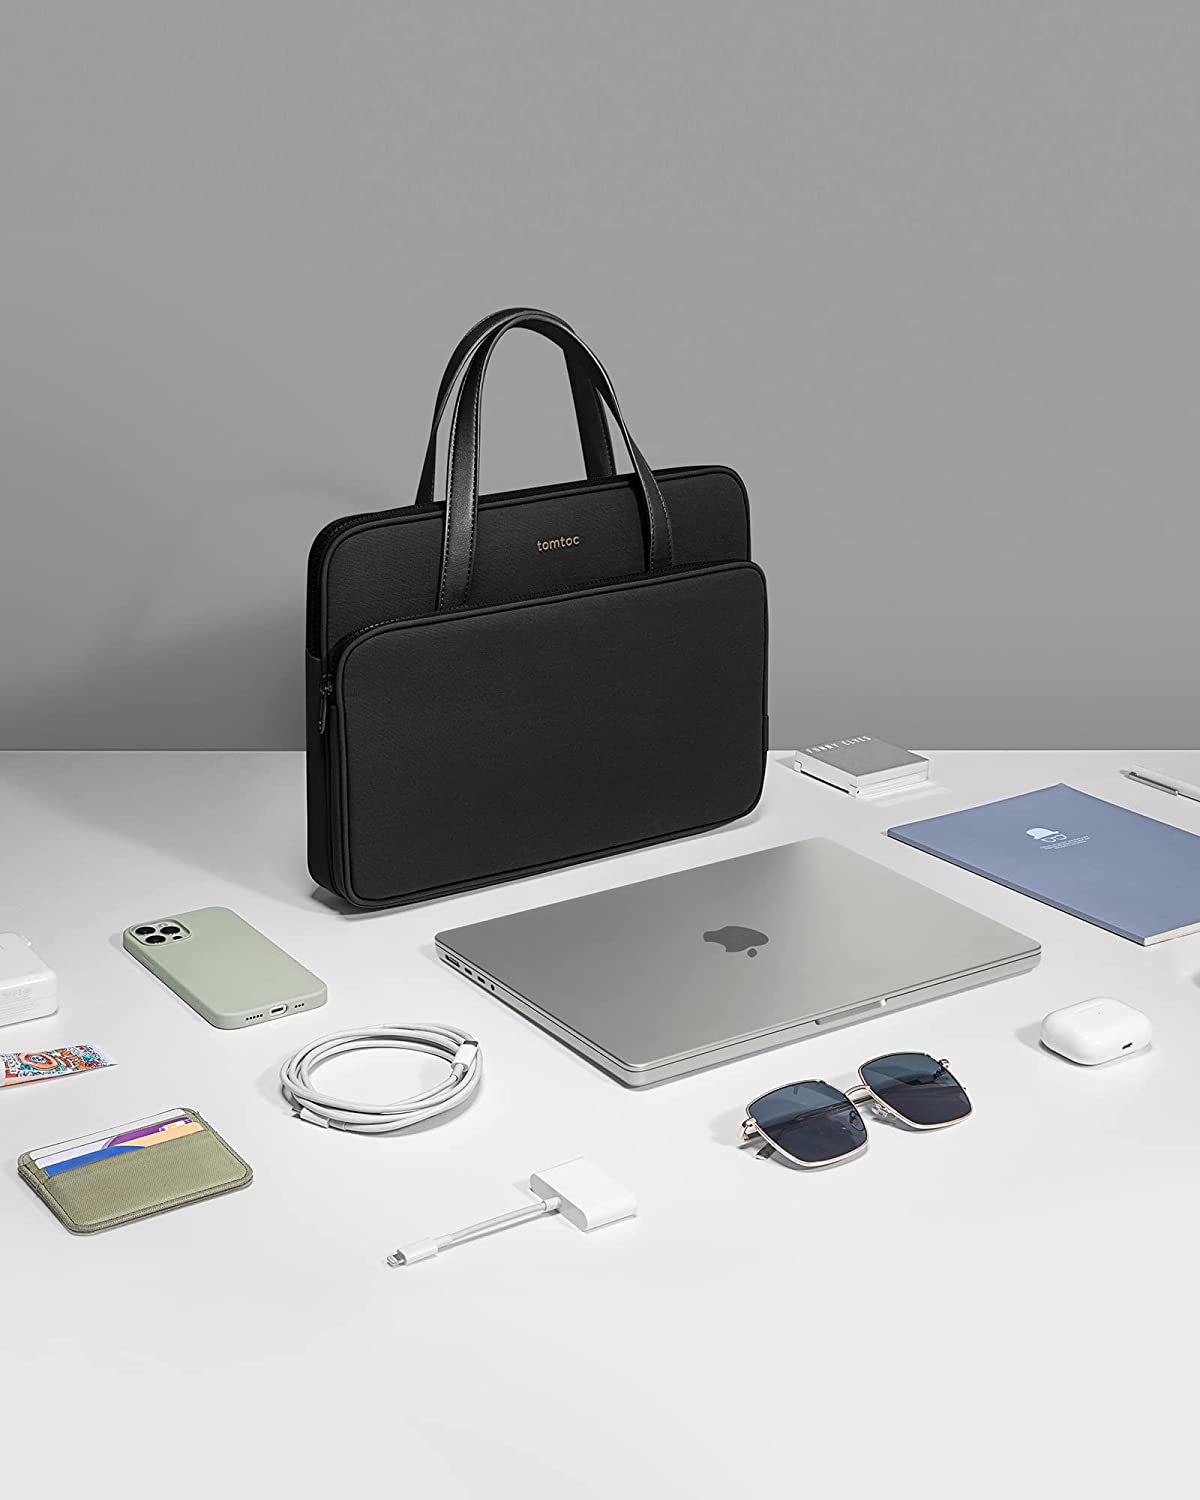 Tomtoc TheHer-H21 Laptop Handbag 16 inch - Black